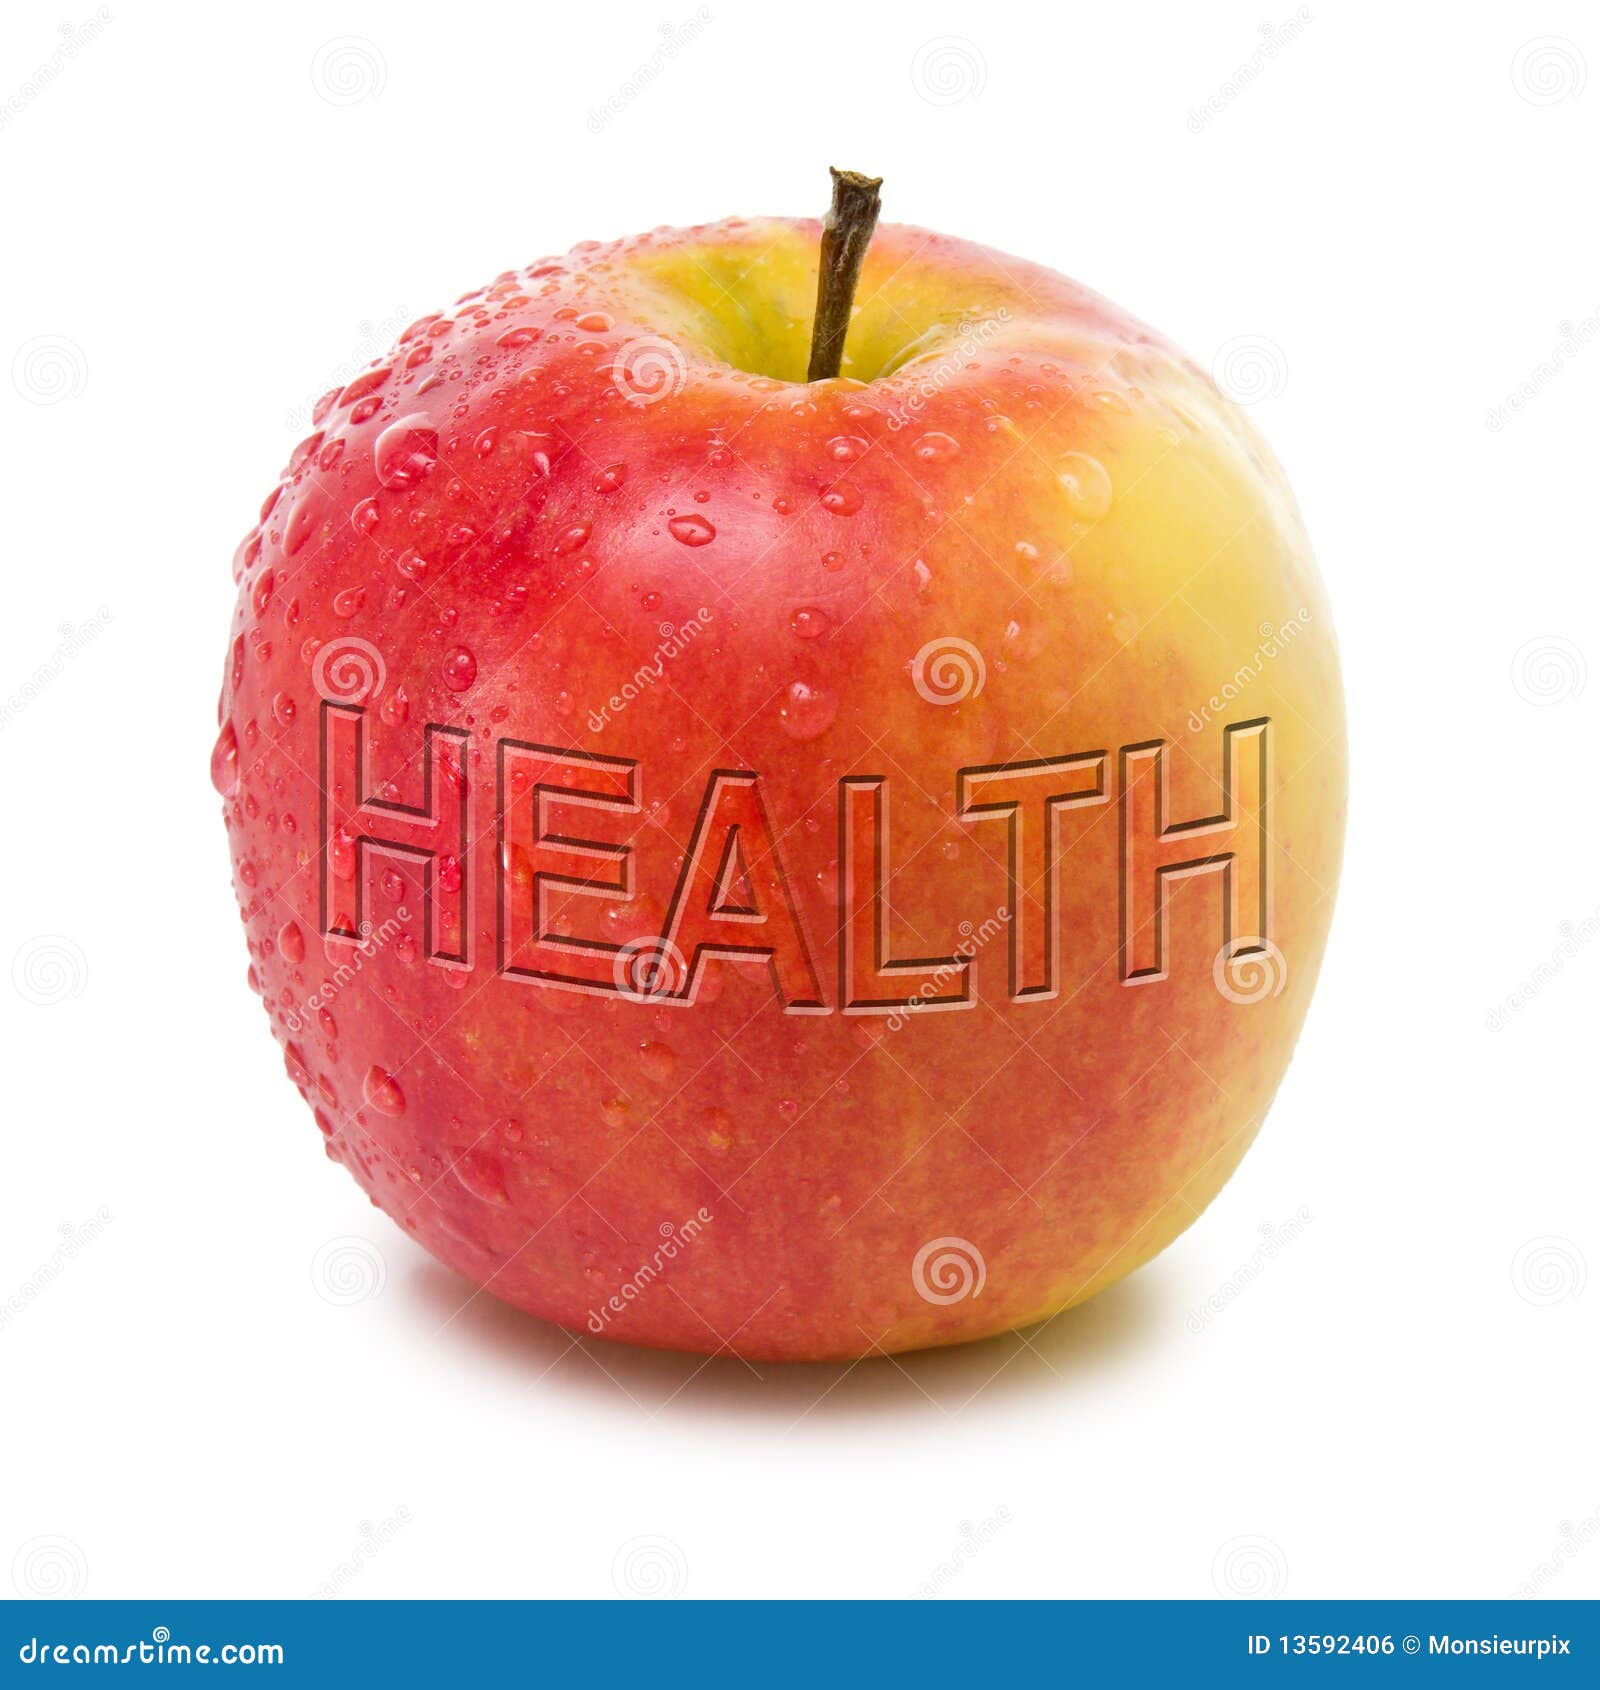 Apple for health stock photo. Image of food, text, studio - 13592406